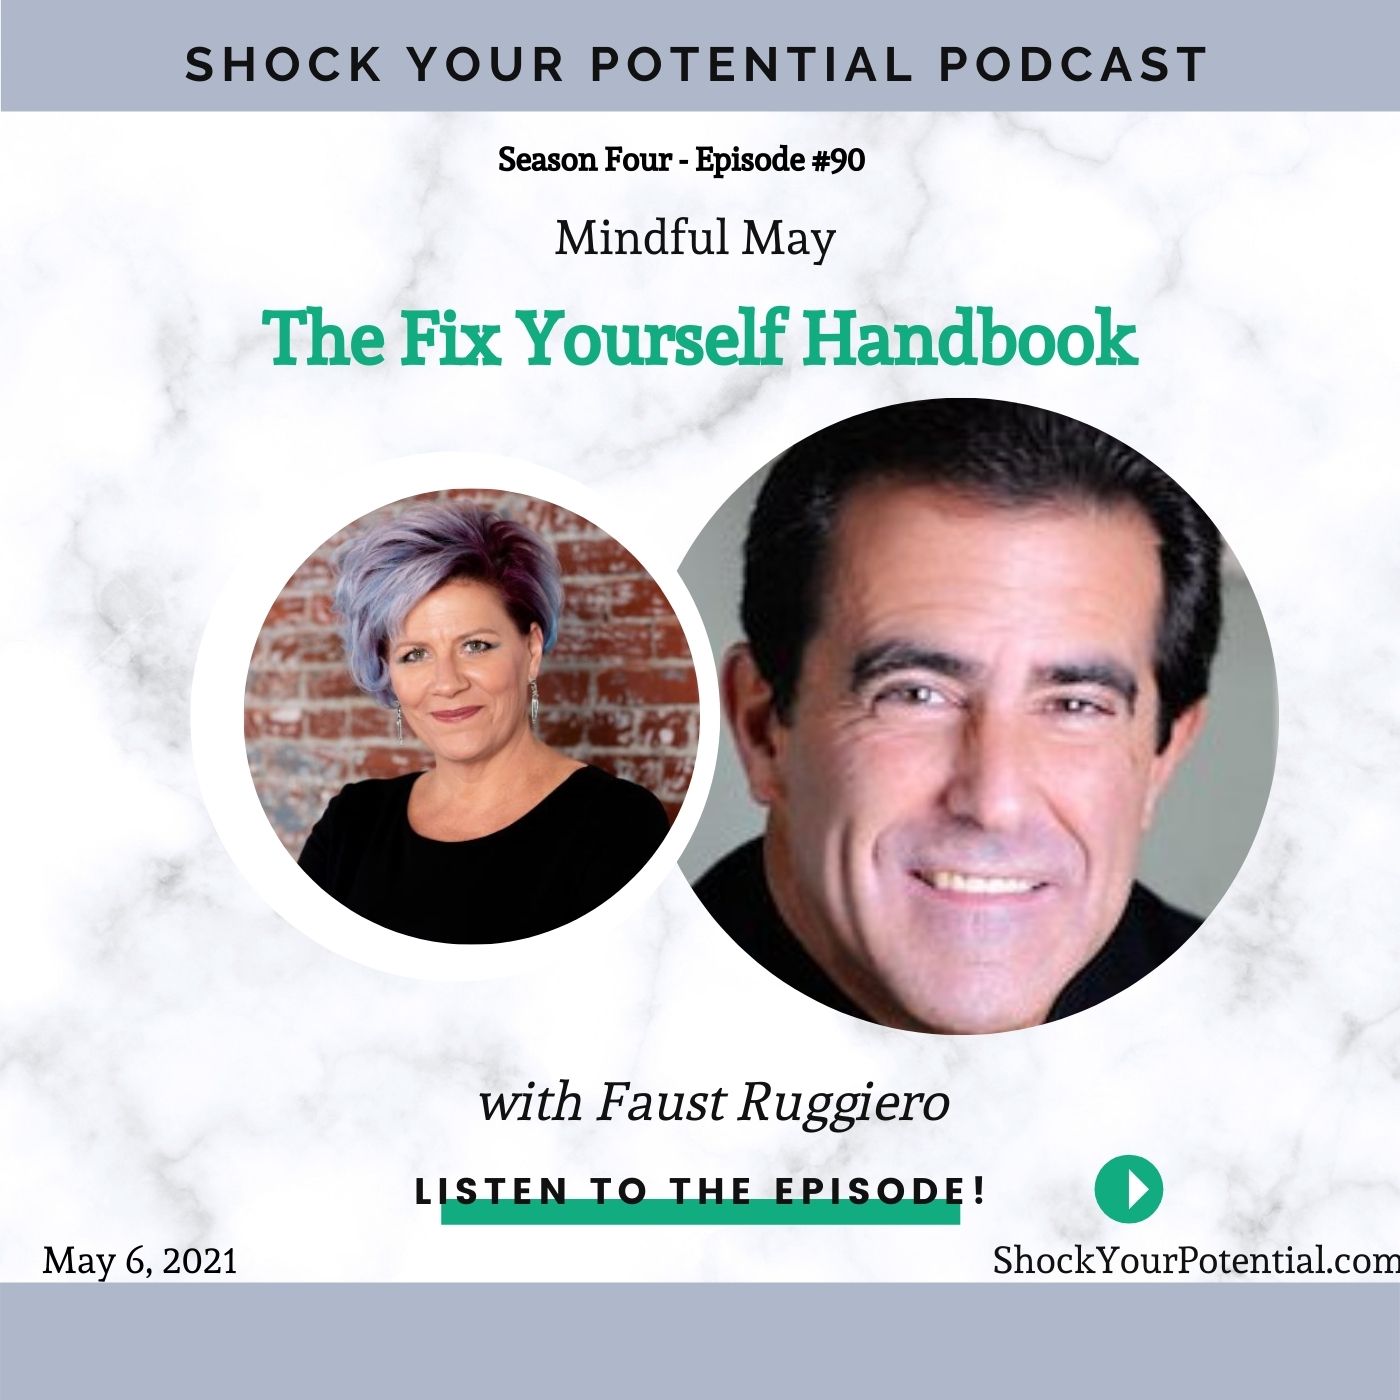 The Fix Yourself Handbook – Faust Ruggiero